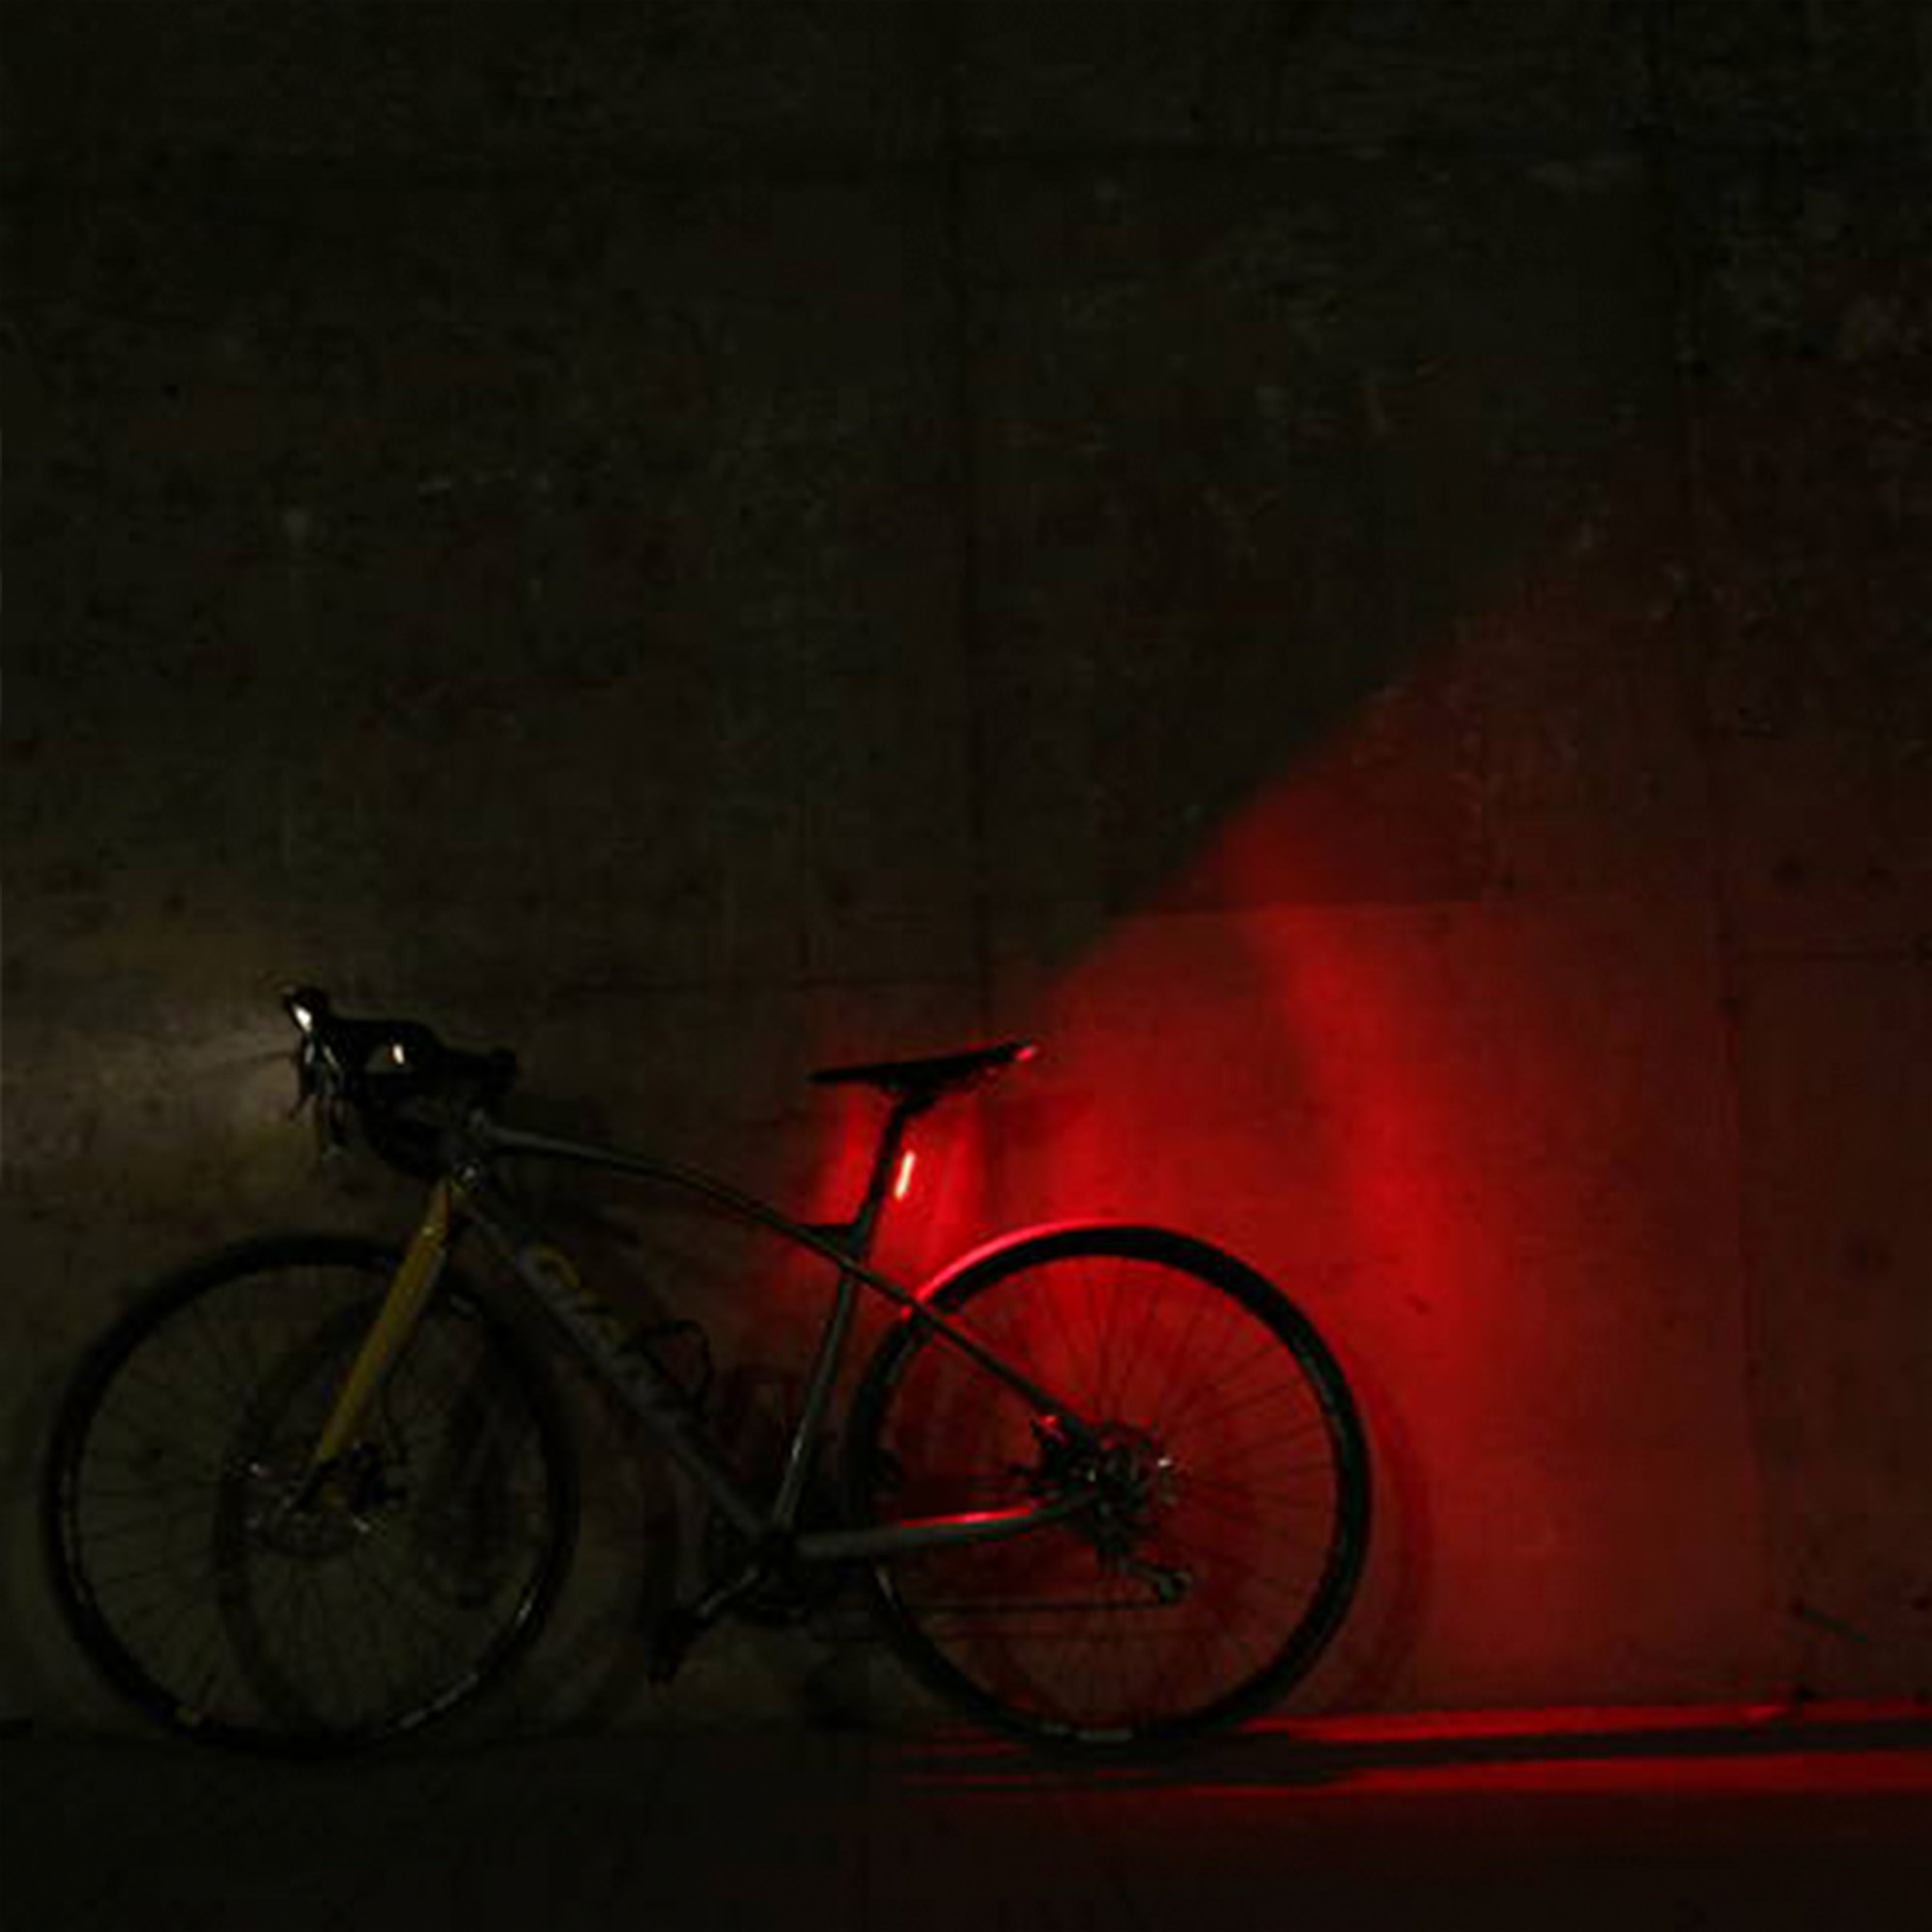 GENERICO Luces Bicicleta Trasera Nocturna Led Chip Inteligente